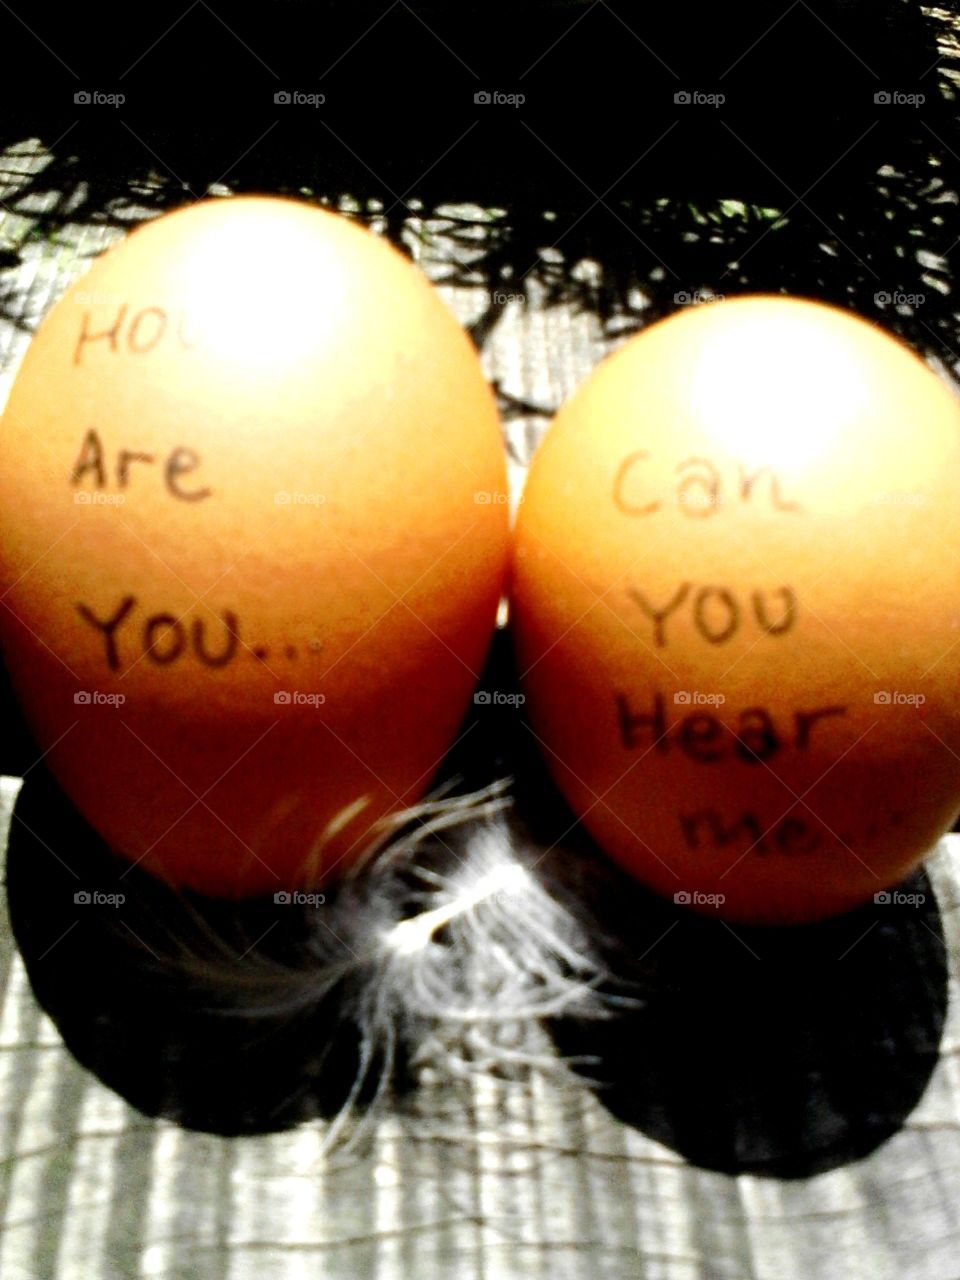 egg word